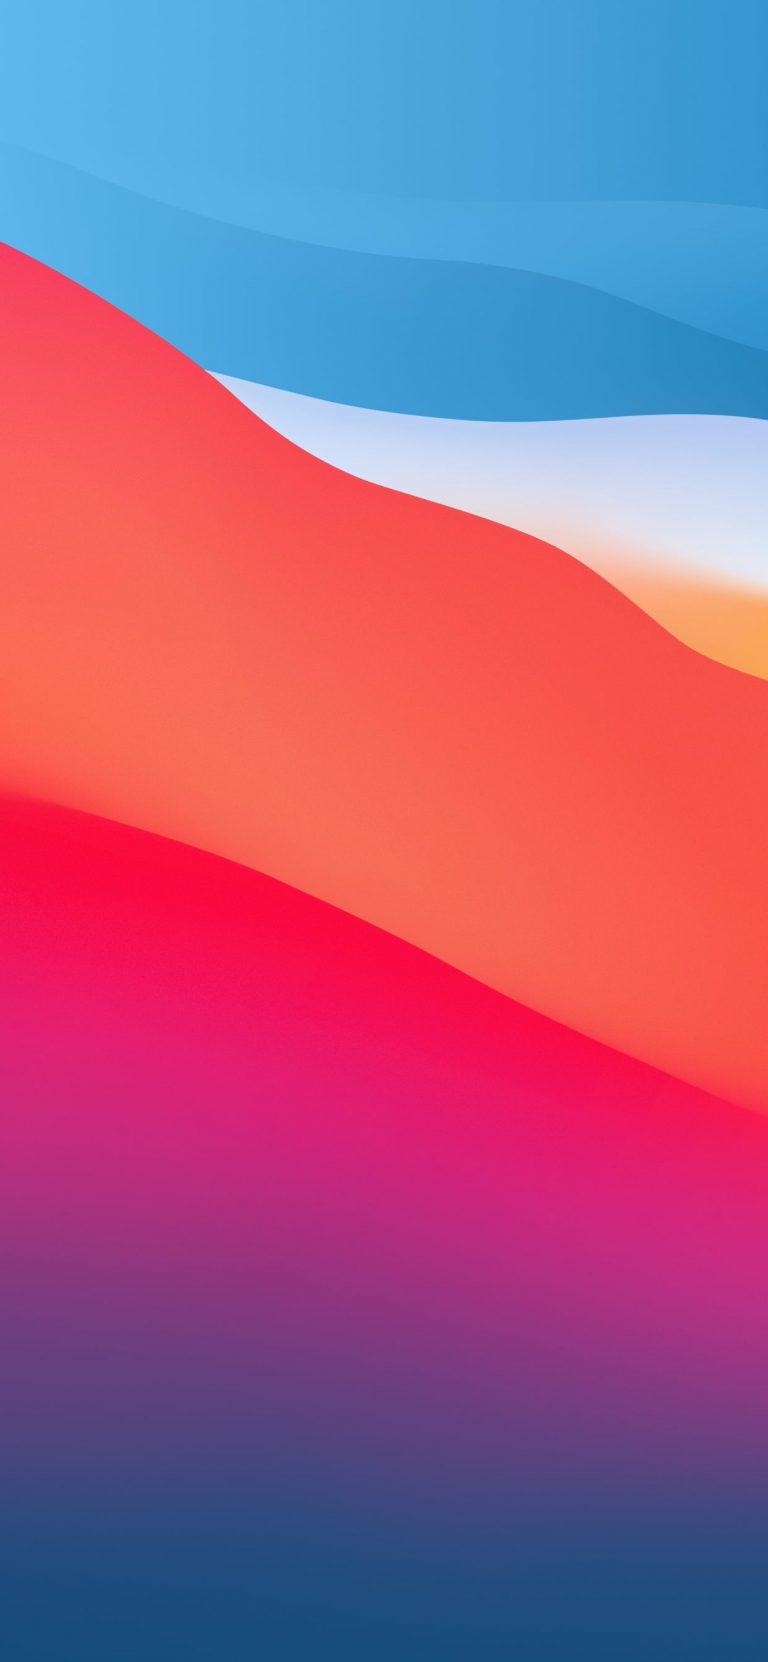 macOS Big Sur wallpaper for iPhone | Zollotech